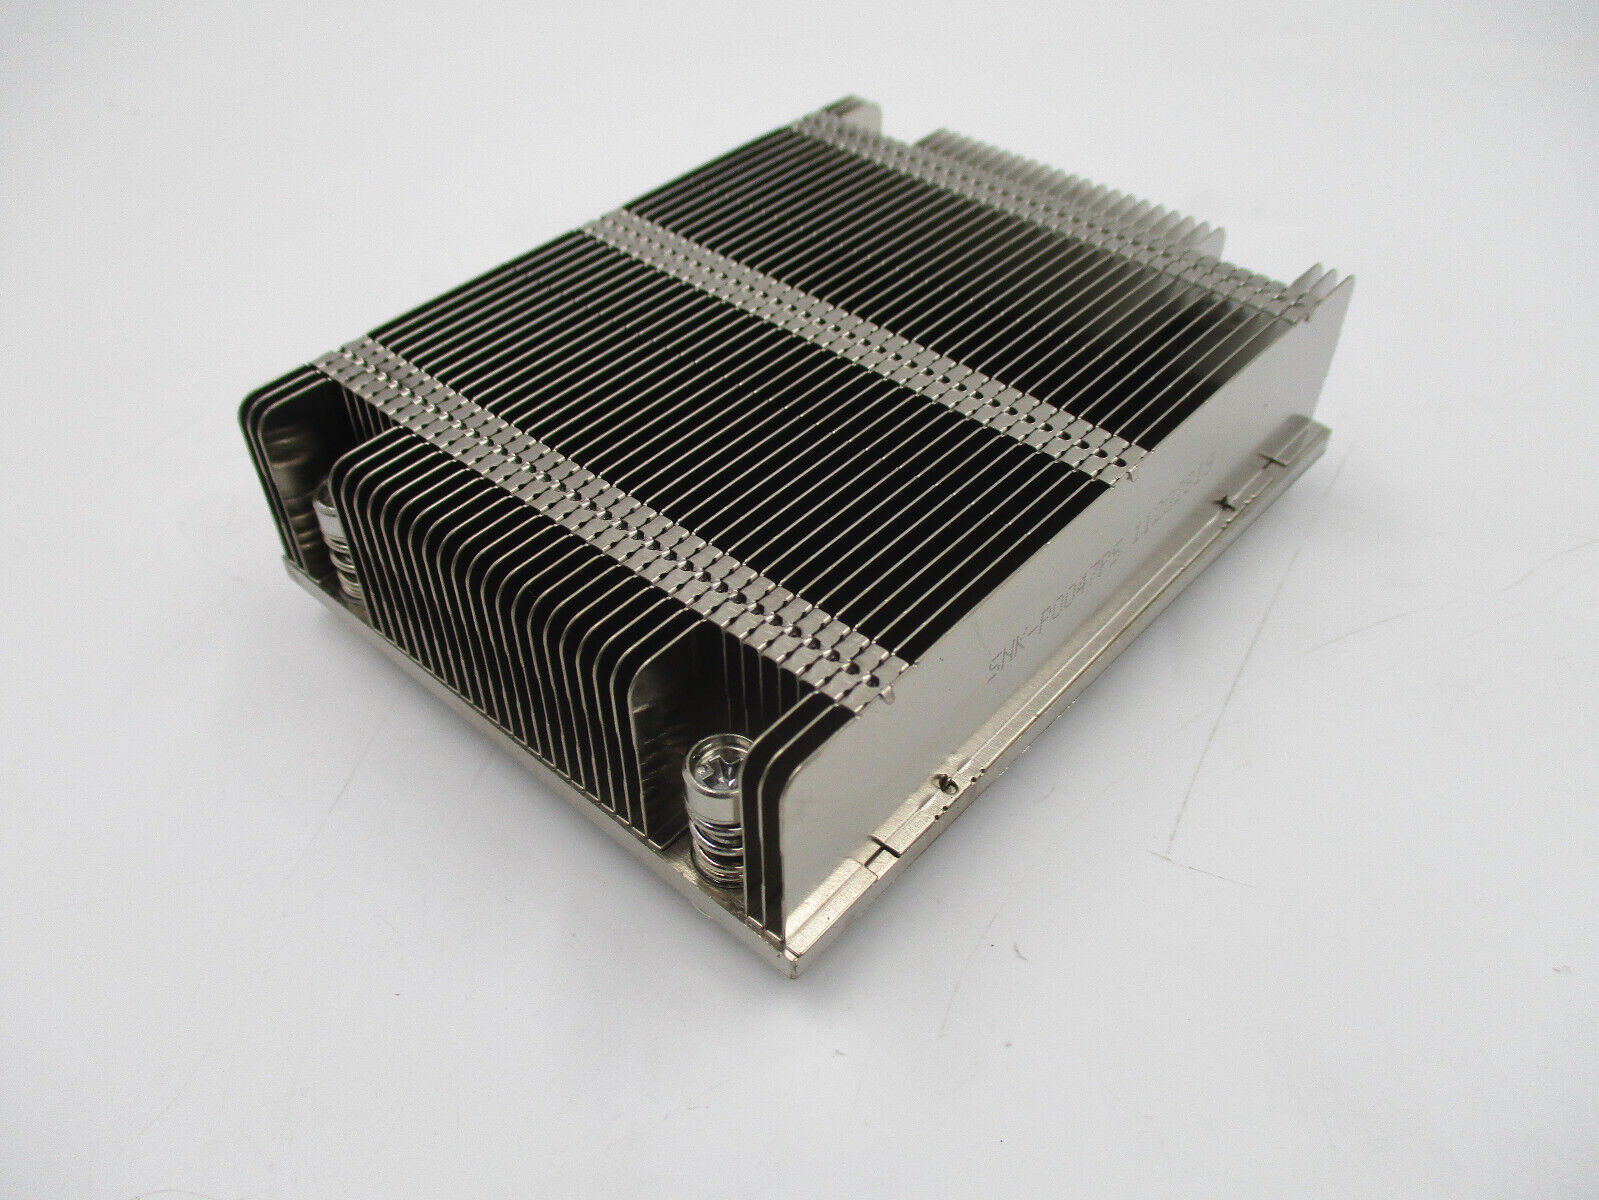 Supermicro 1U Passive Heat Sink LGA2011 Socket Screw Down Socket SNK-P0047PS